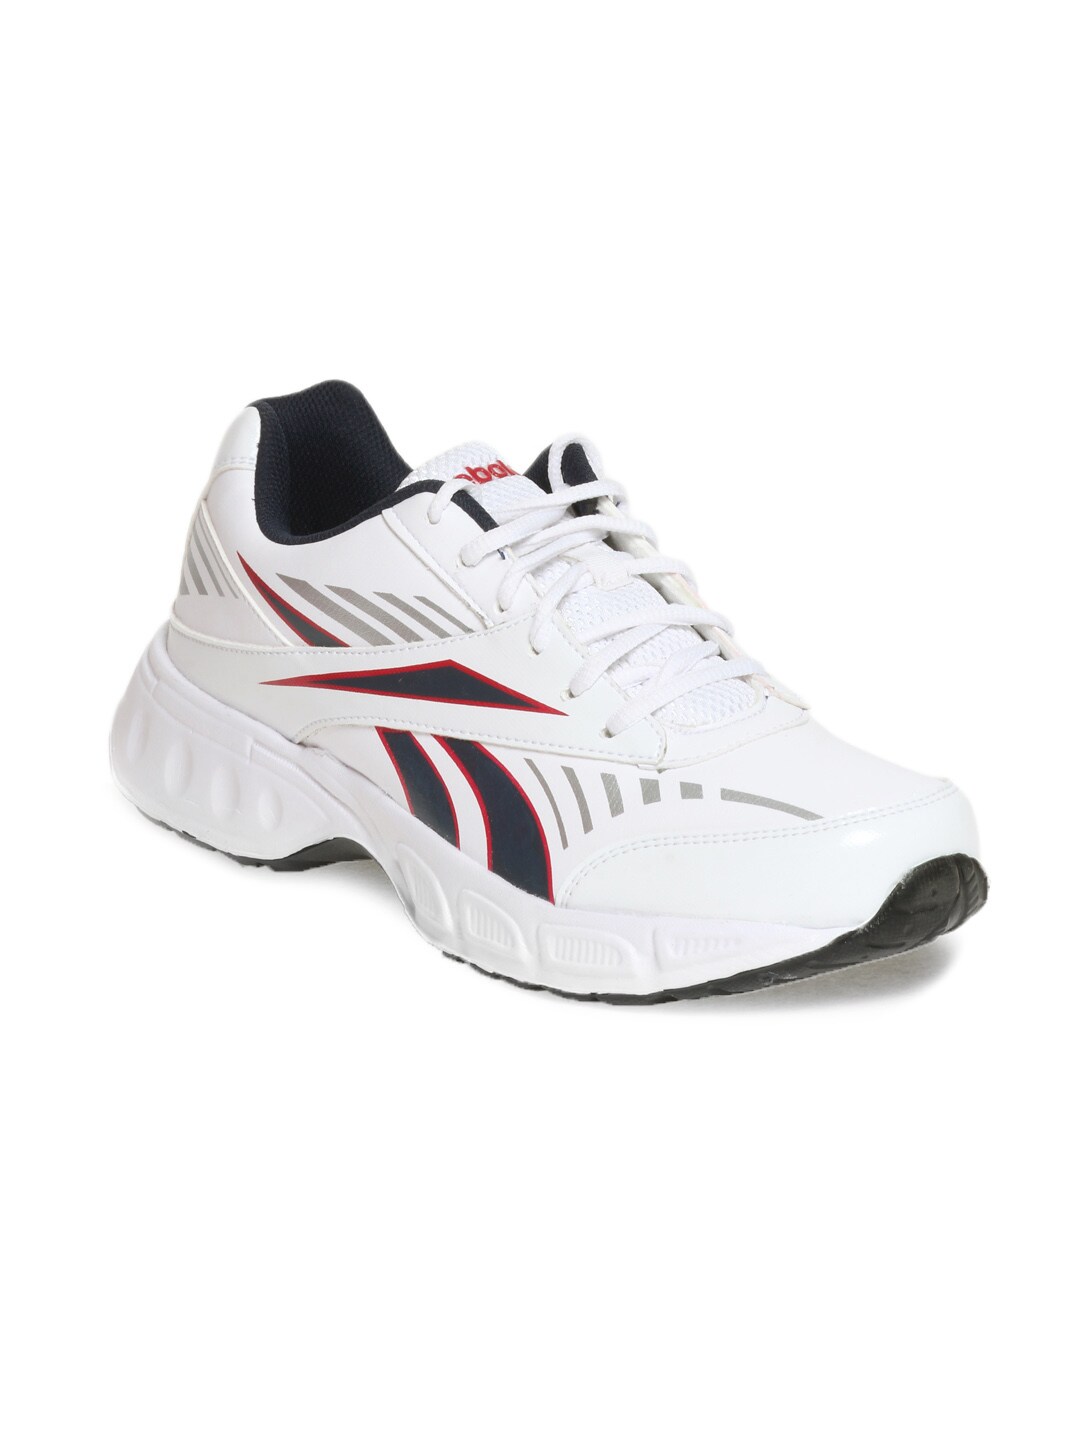 Reebok Men White Acer Sports Shoes